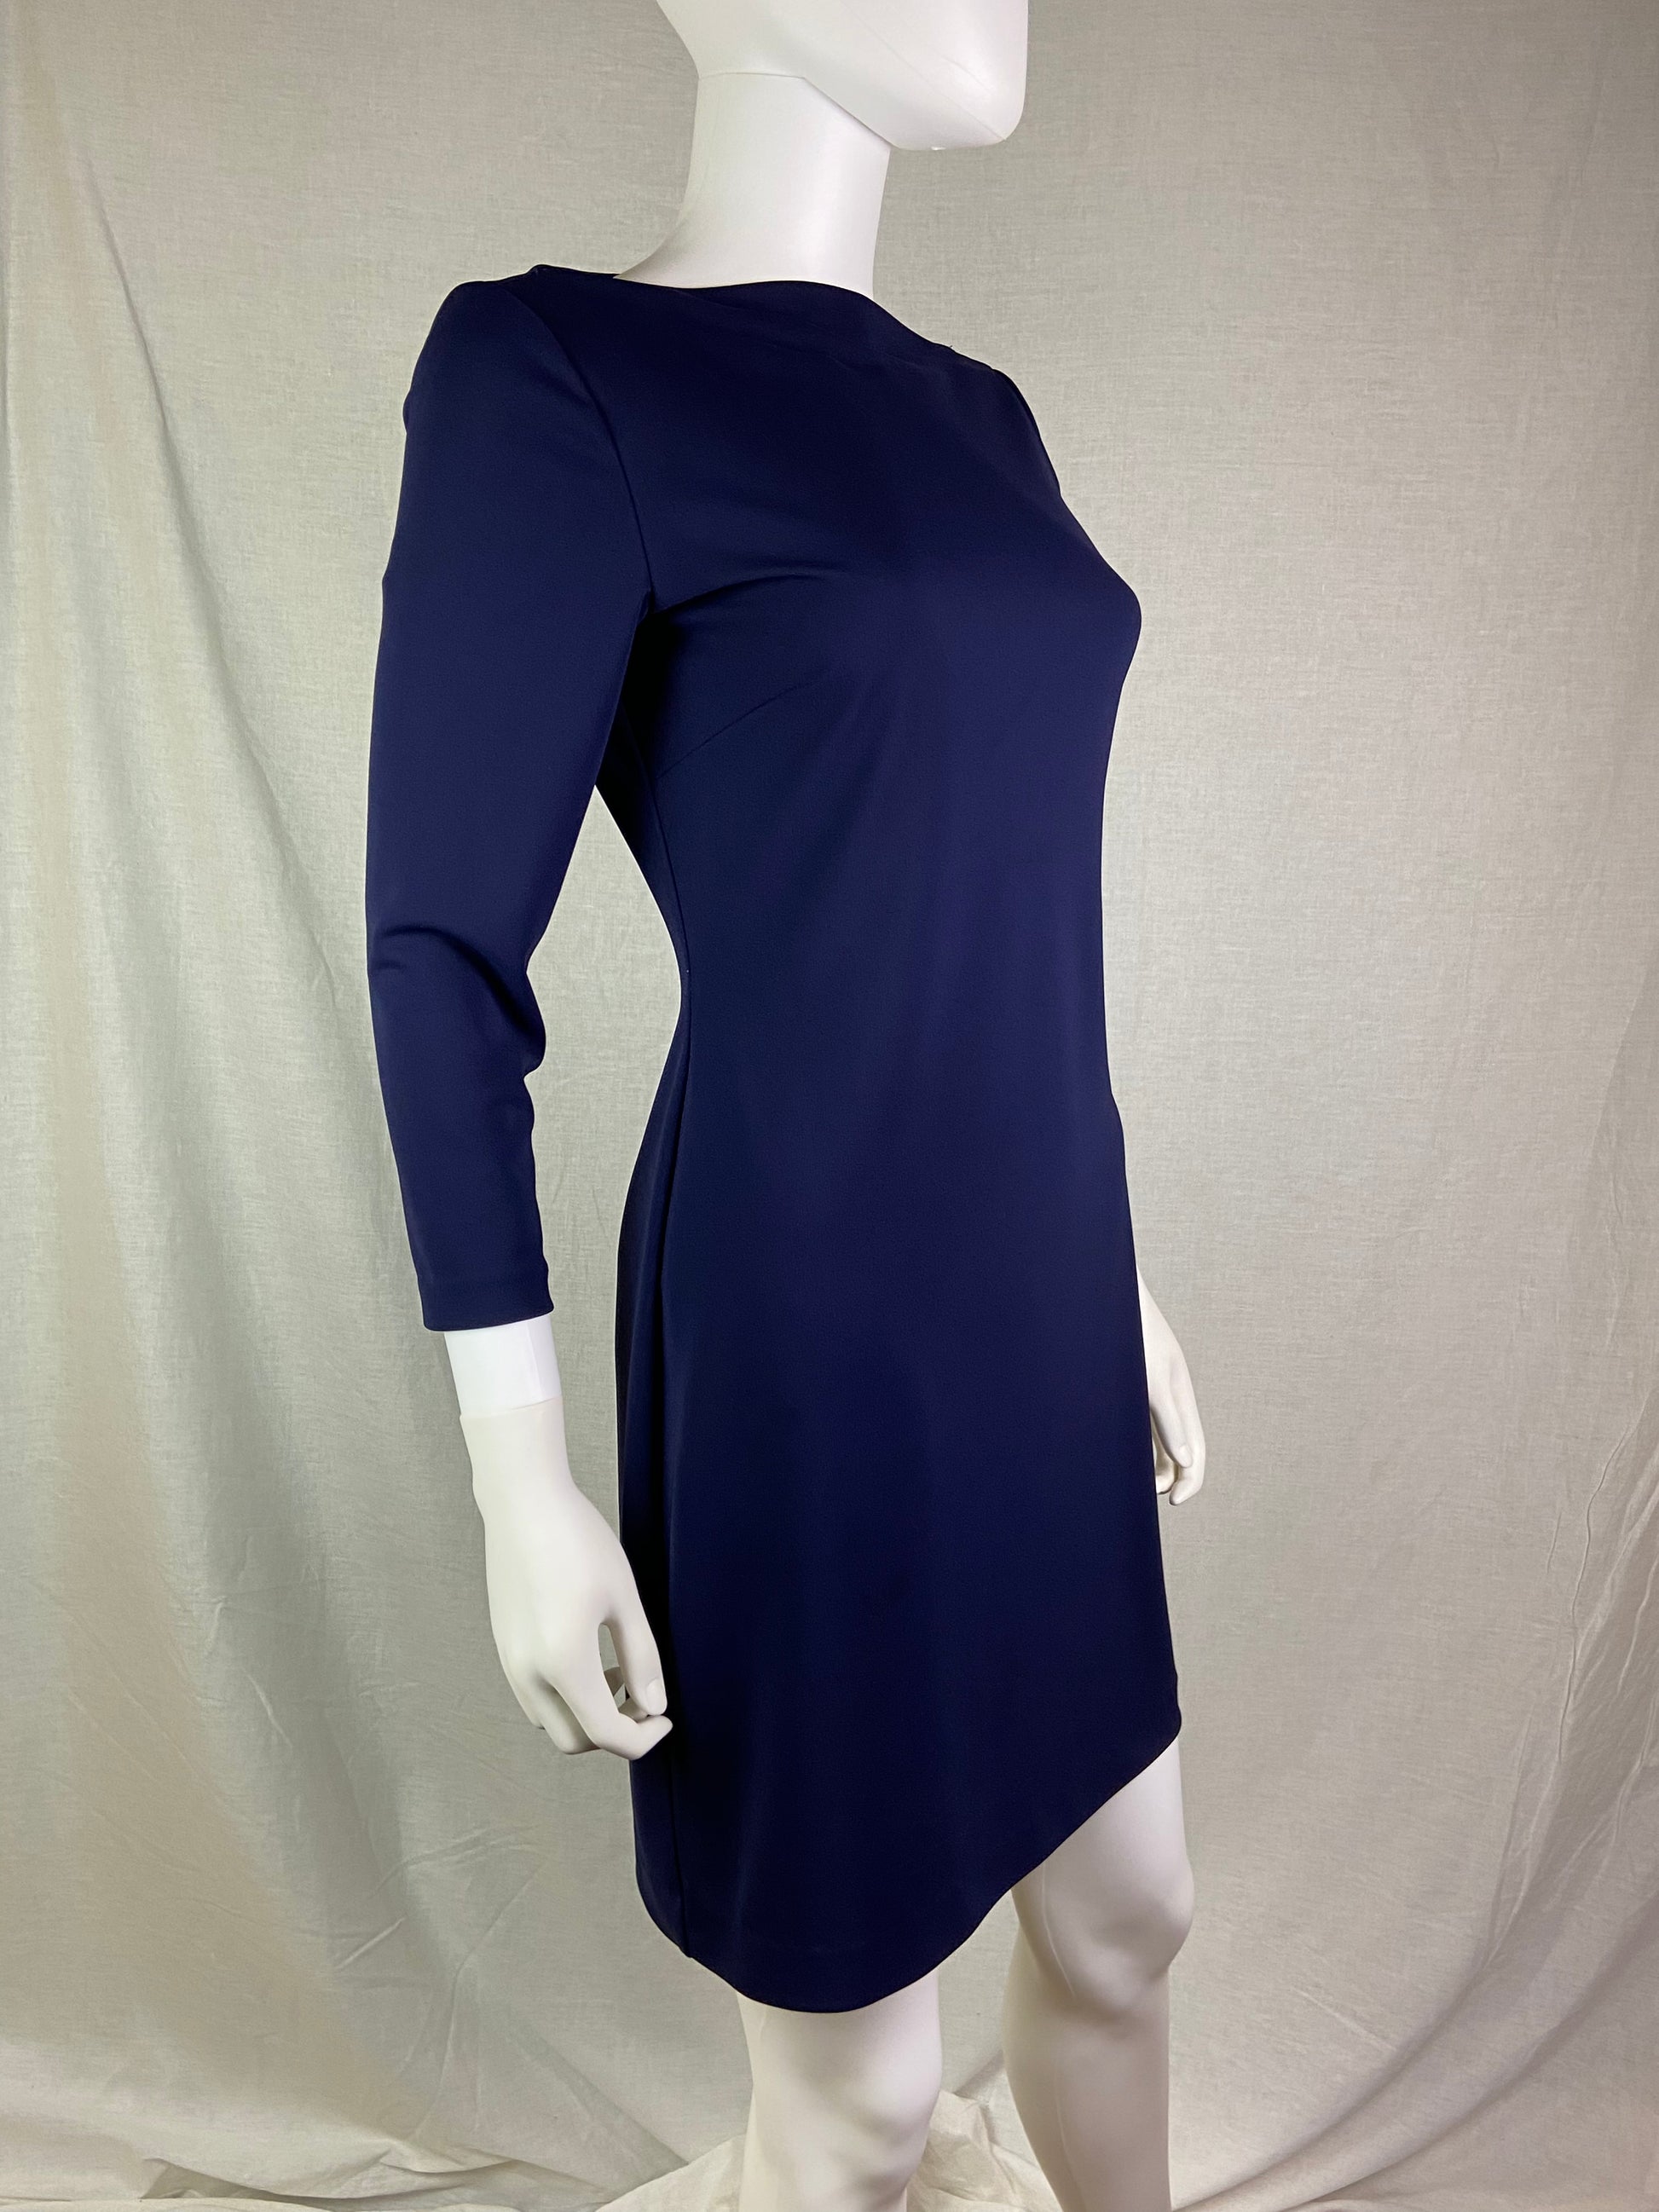 Nicole Miller Navy Blue Shift Mini Dress ABBY ESSIE STUDIOS